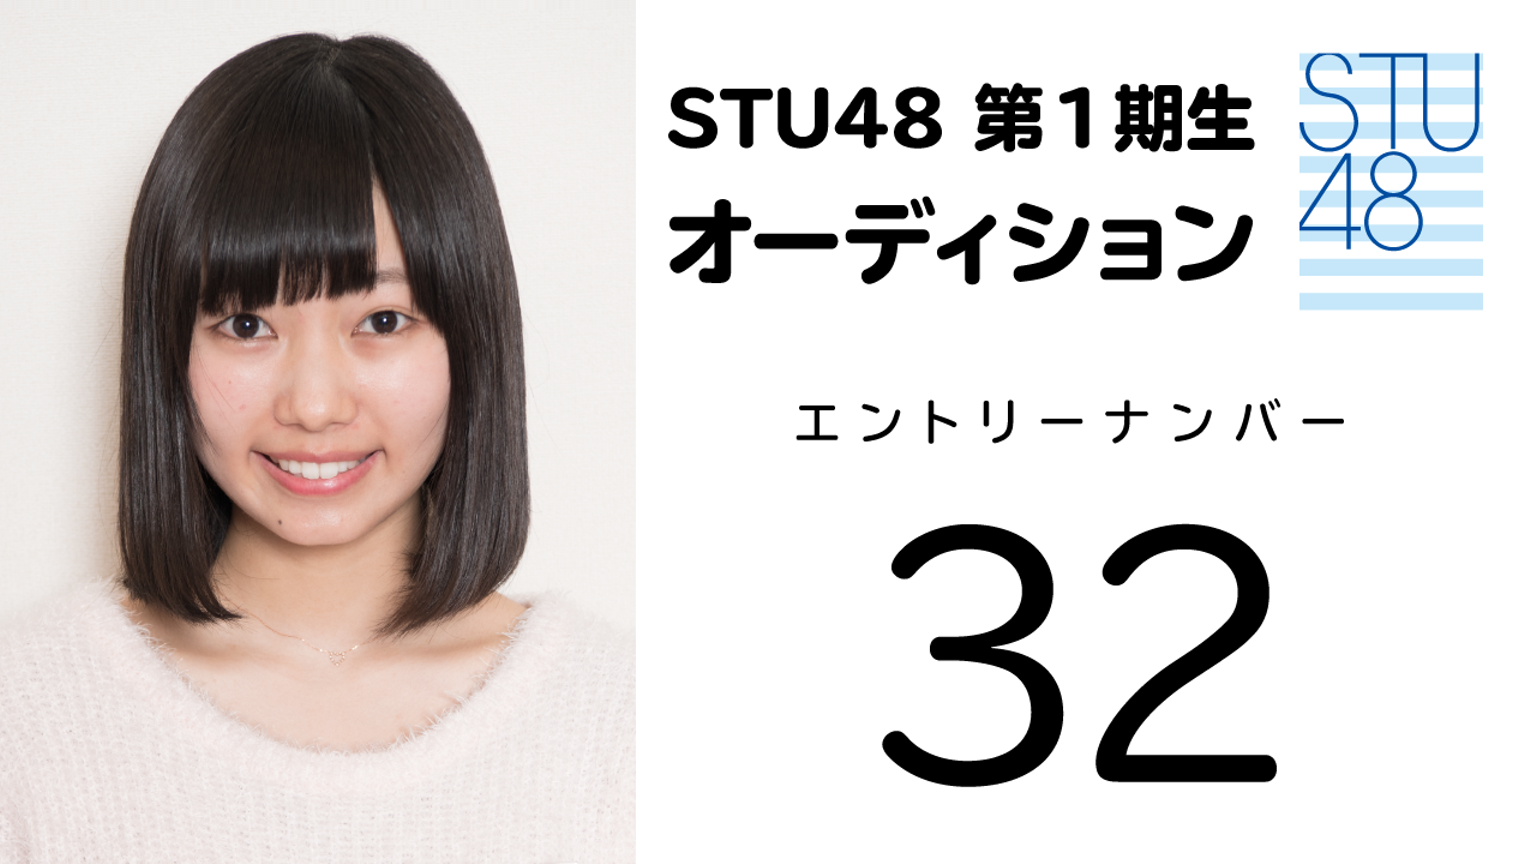 STU48 第1期受験生 エントリーナンバー32番